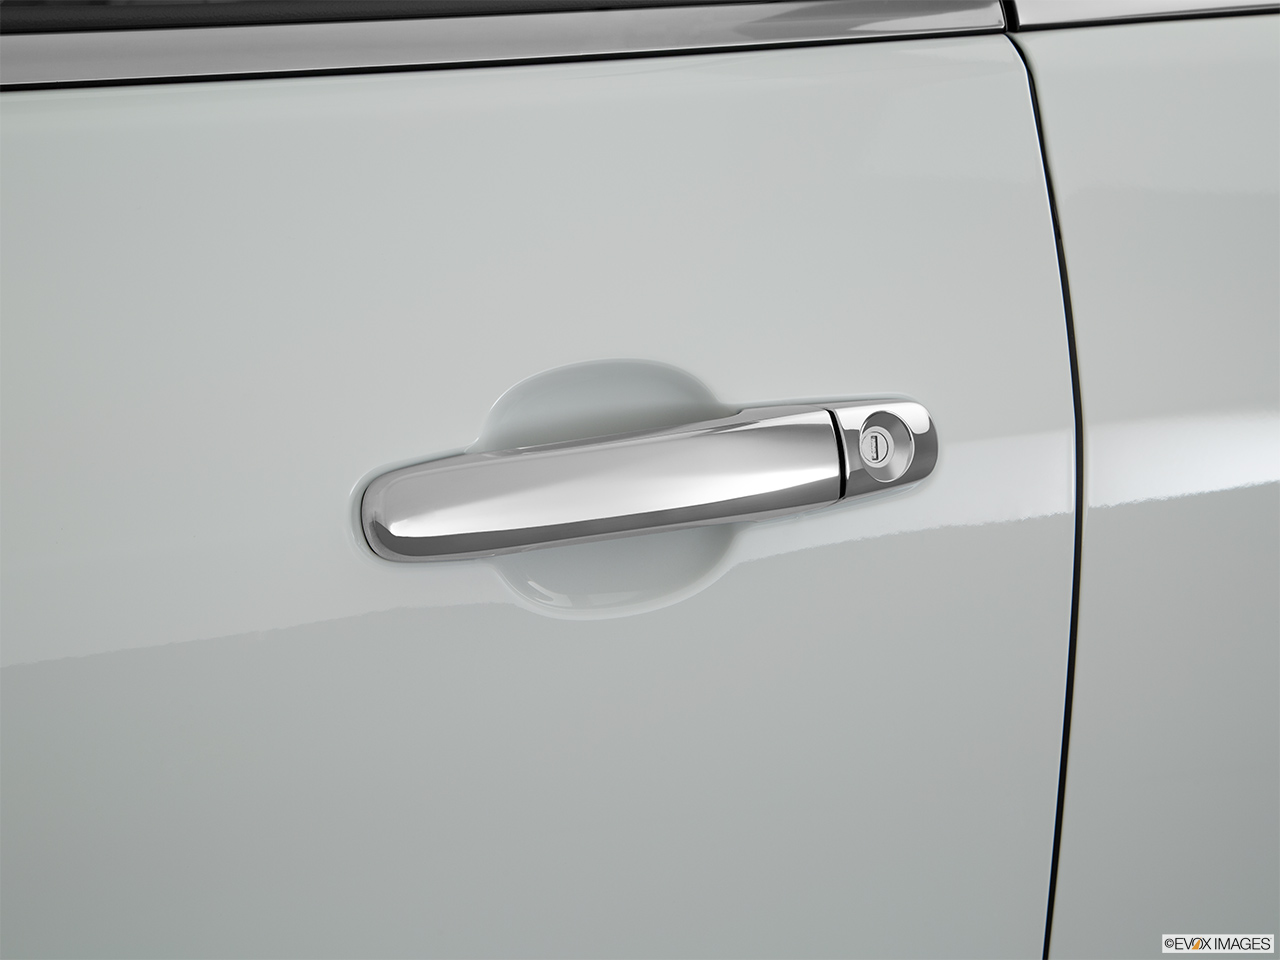 2017 GMC Acadia Limited SLT Drivers Side Door handle. 